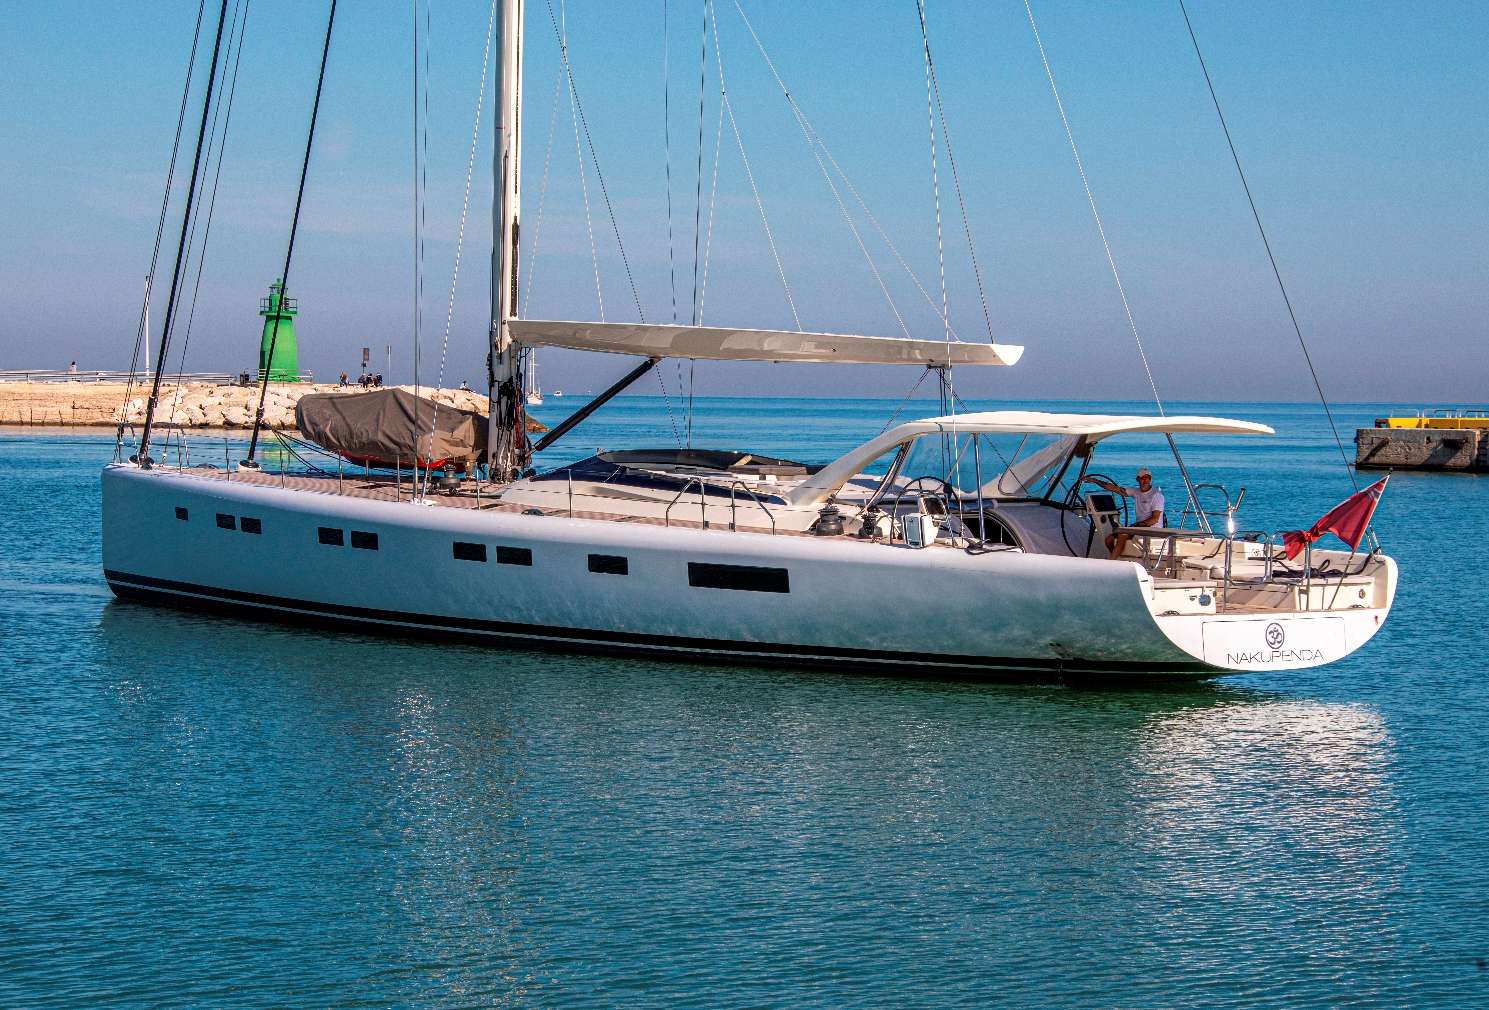 nakupenda - Yacht Charter Beaulieu-sur-Mer & Boat hire in Fr. Riviera & Tyrrhenian Sea 1